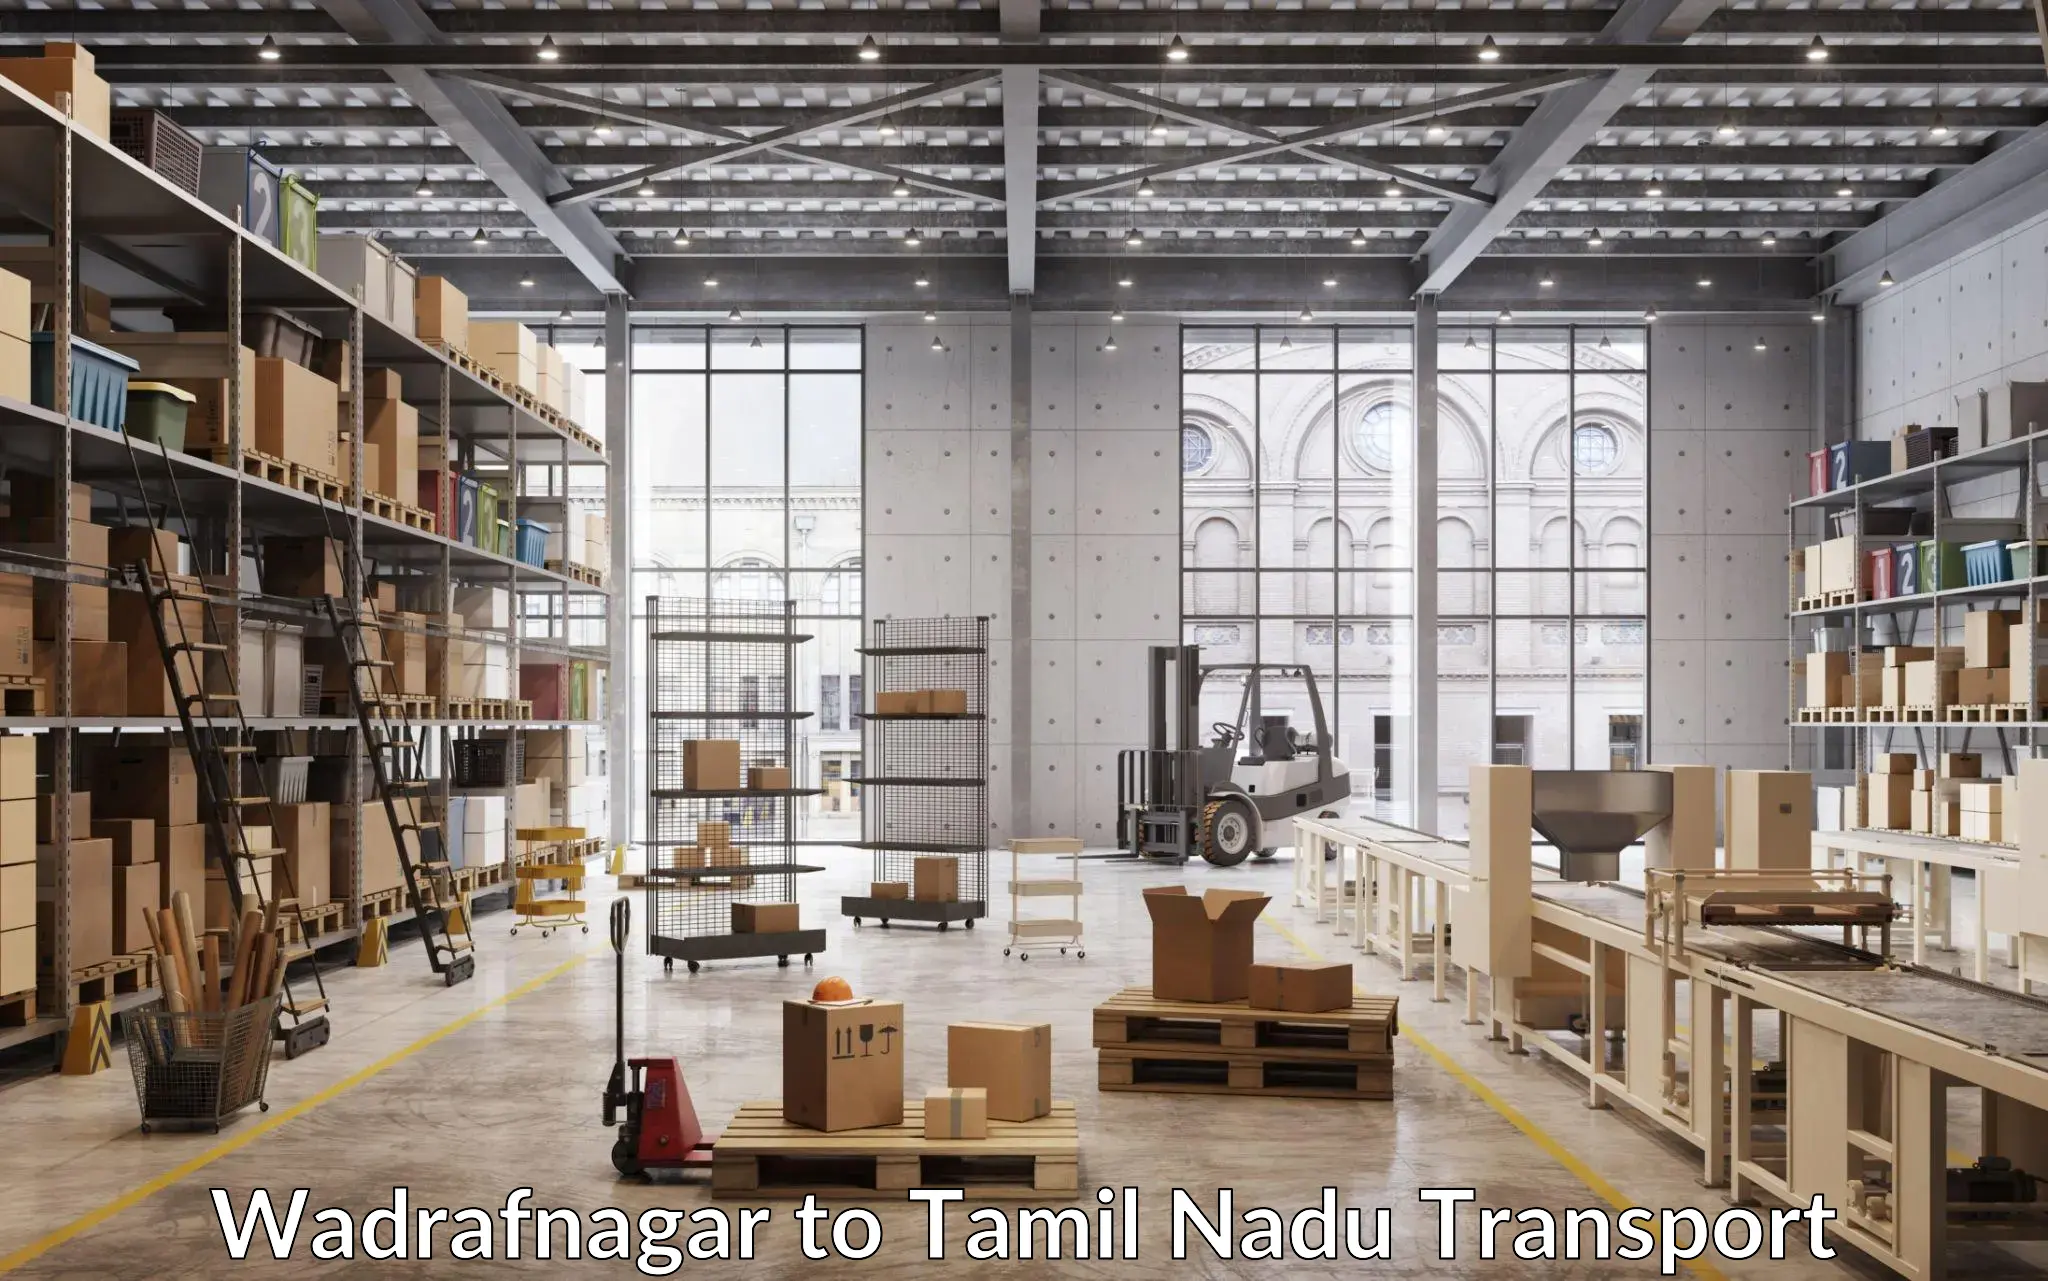 Delivery service Wadrafnagar to Sankarapuram